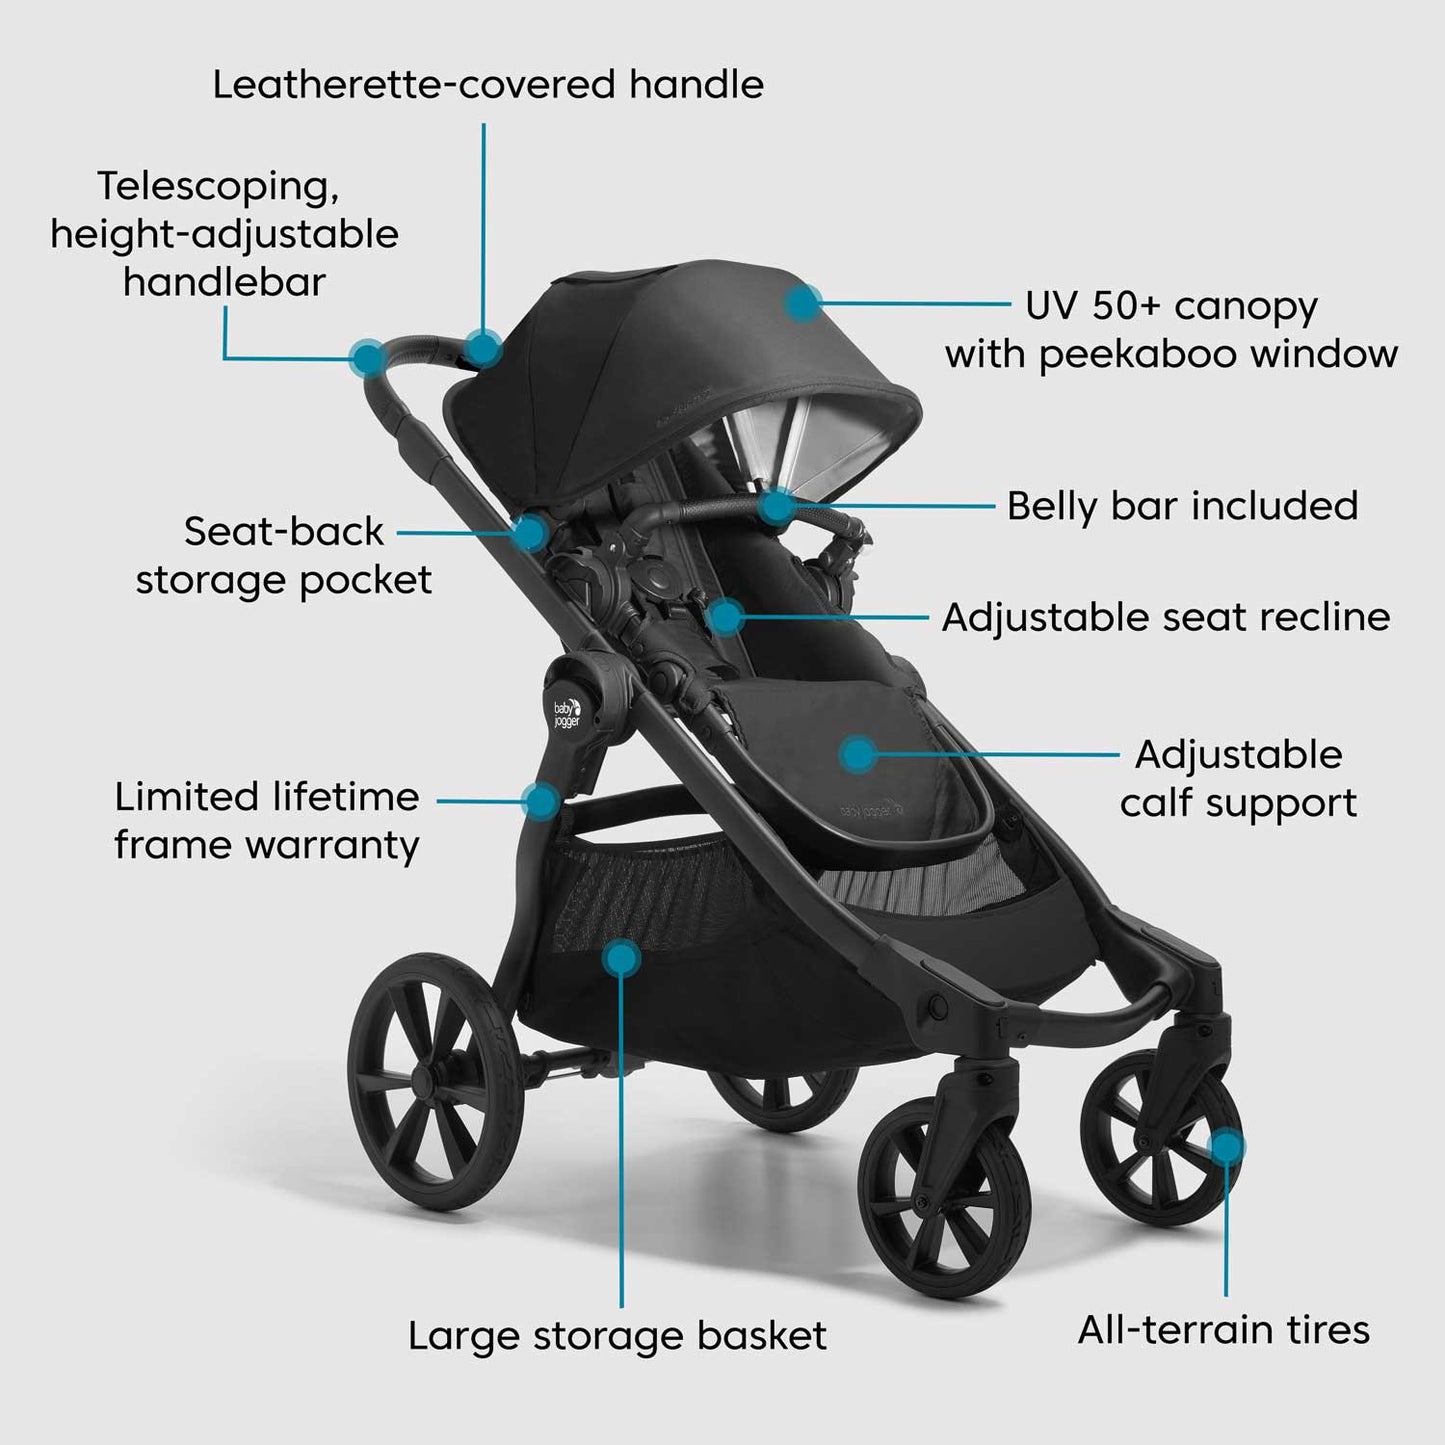 Baby Jogger City Select 2 Eco Stroller